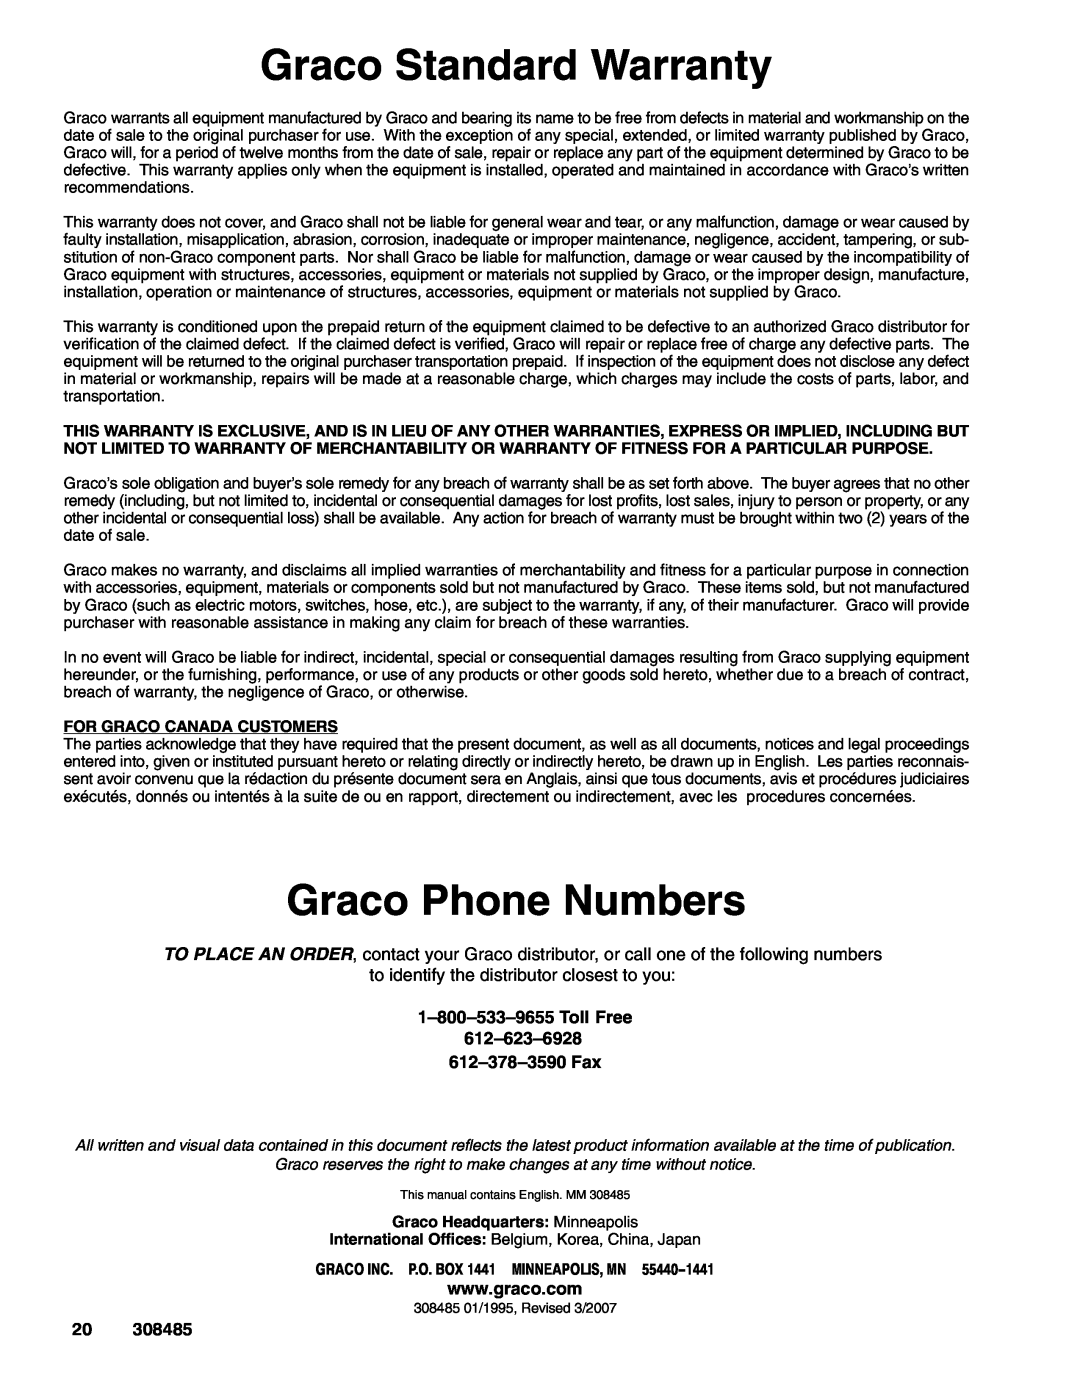 Graco Series B Graco Standard Warranty, Graco Phone Numbers, For Graco Canada Customers, Graco Headquarters Minneapolis 